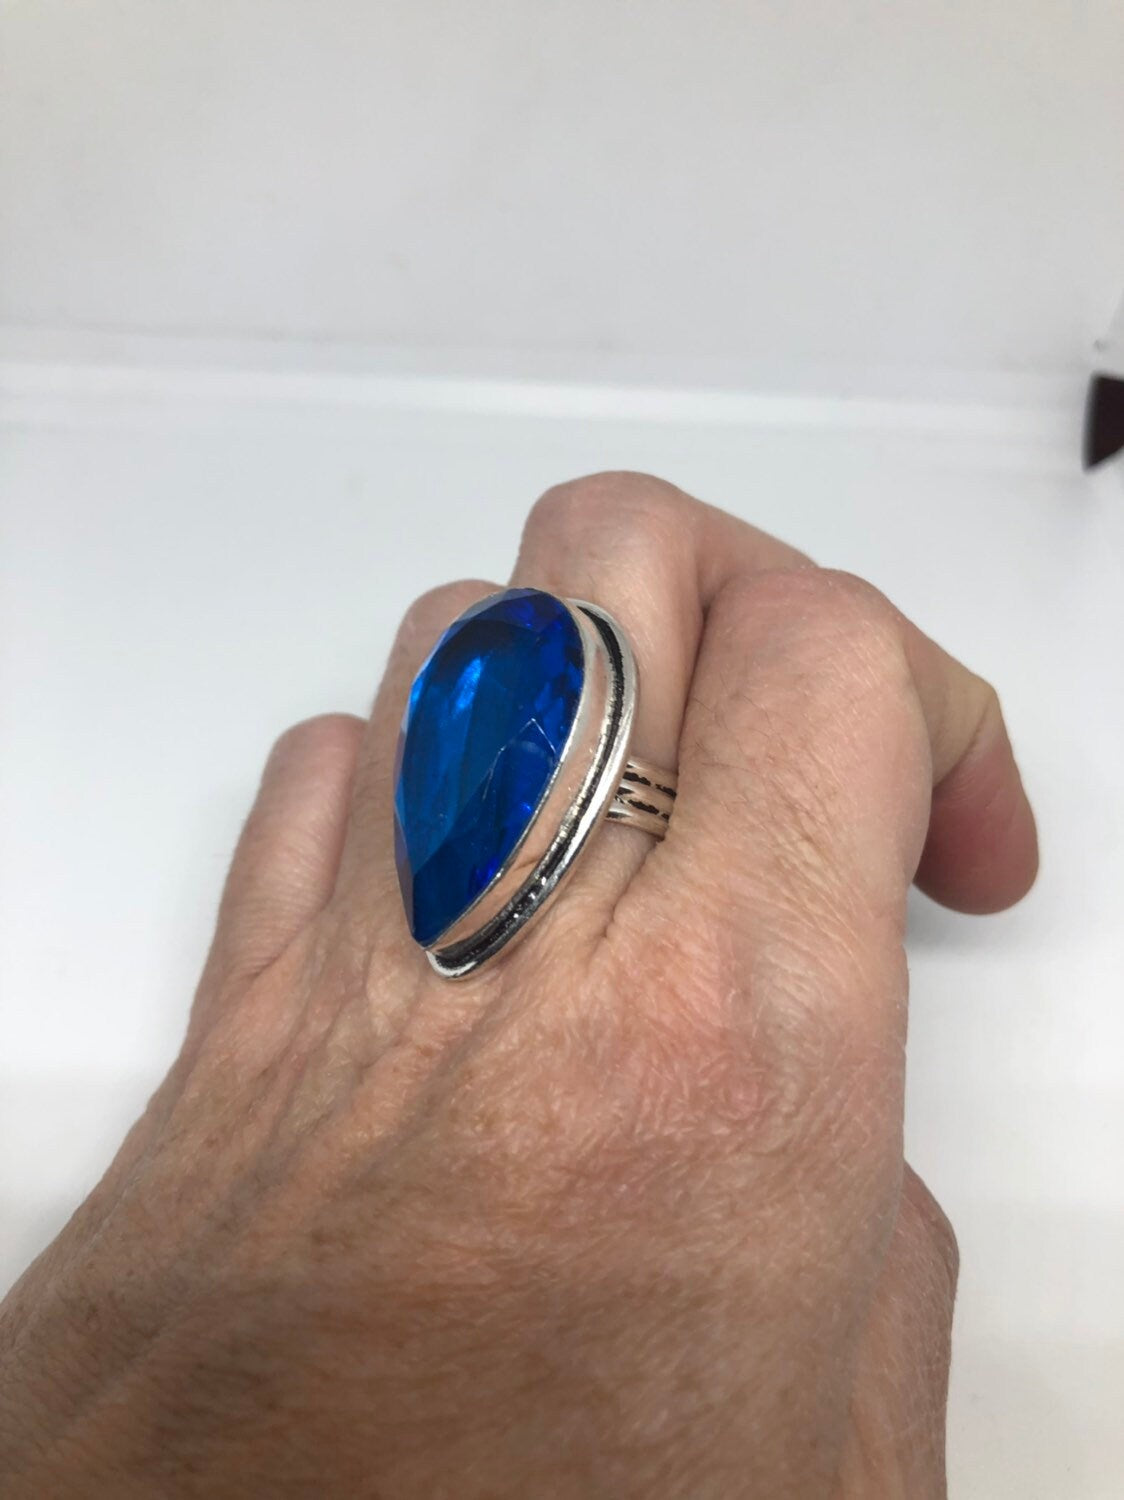 Vintage Aqua Turquoise Vintage Art Glass Ring 1.25 Long Knuckle Ring